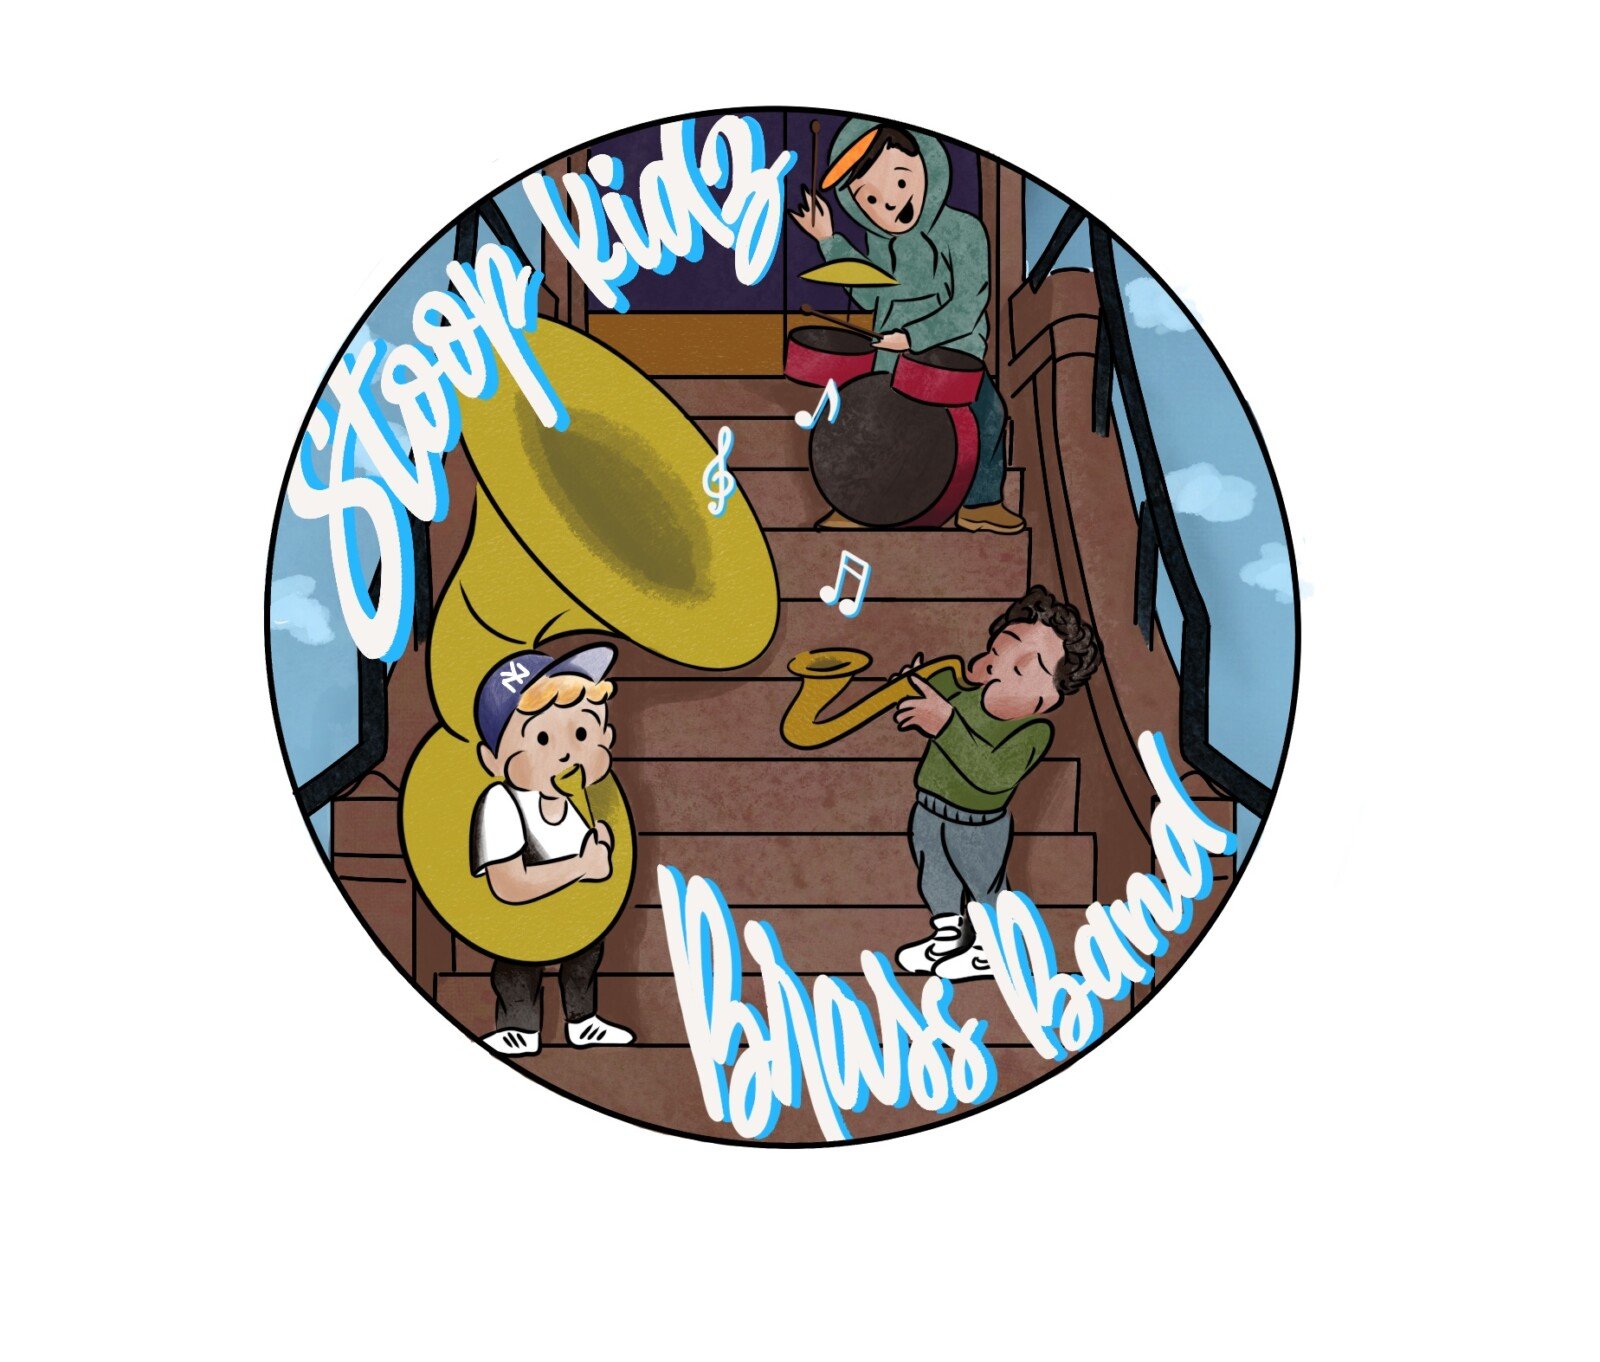 Stoop Kidz Brass Band + The Baxbys